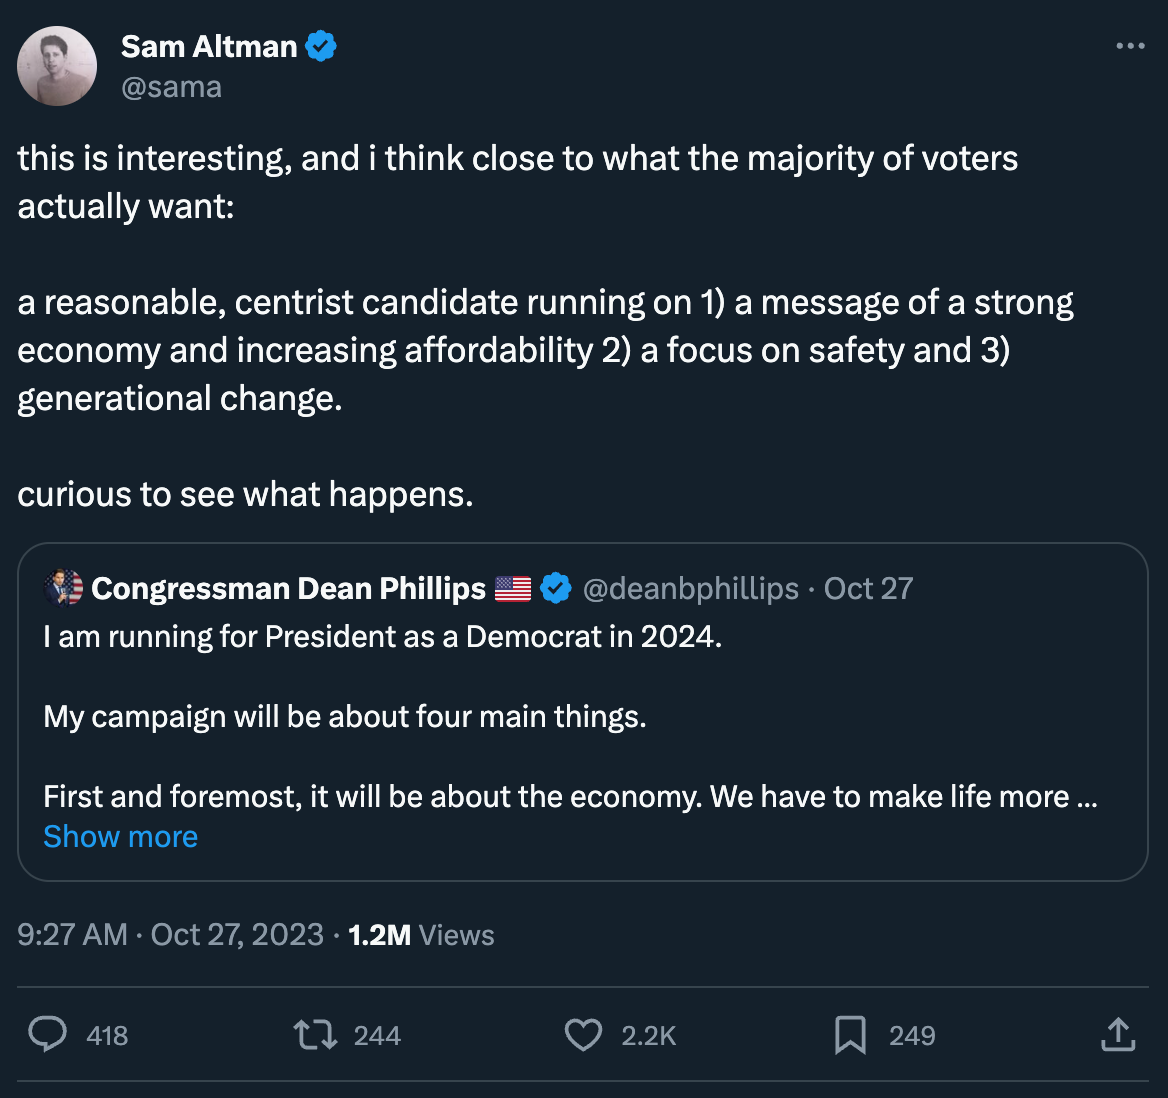 Is Sam Altman running for President in 2024?